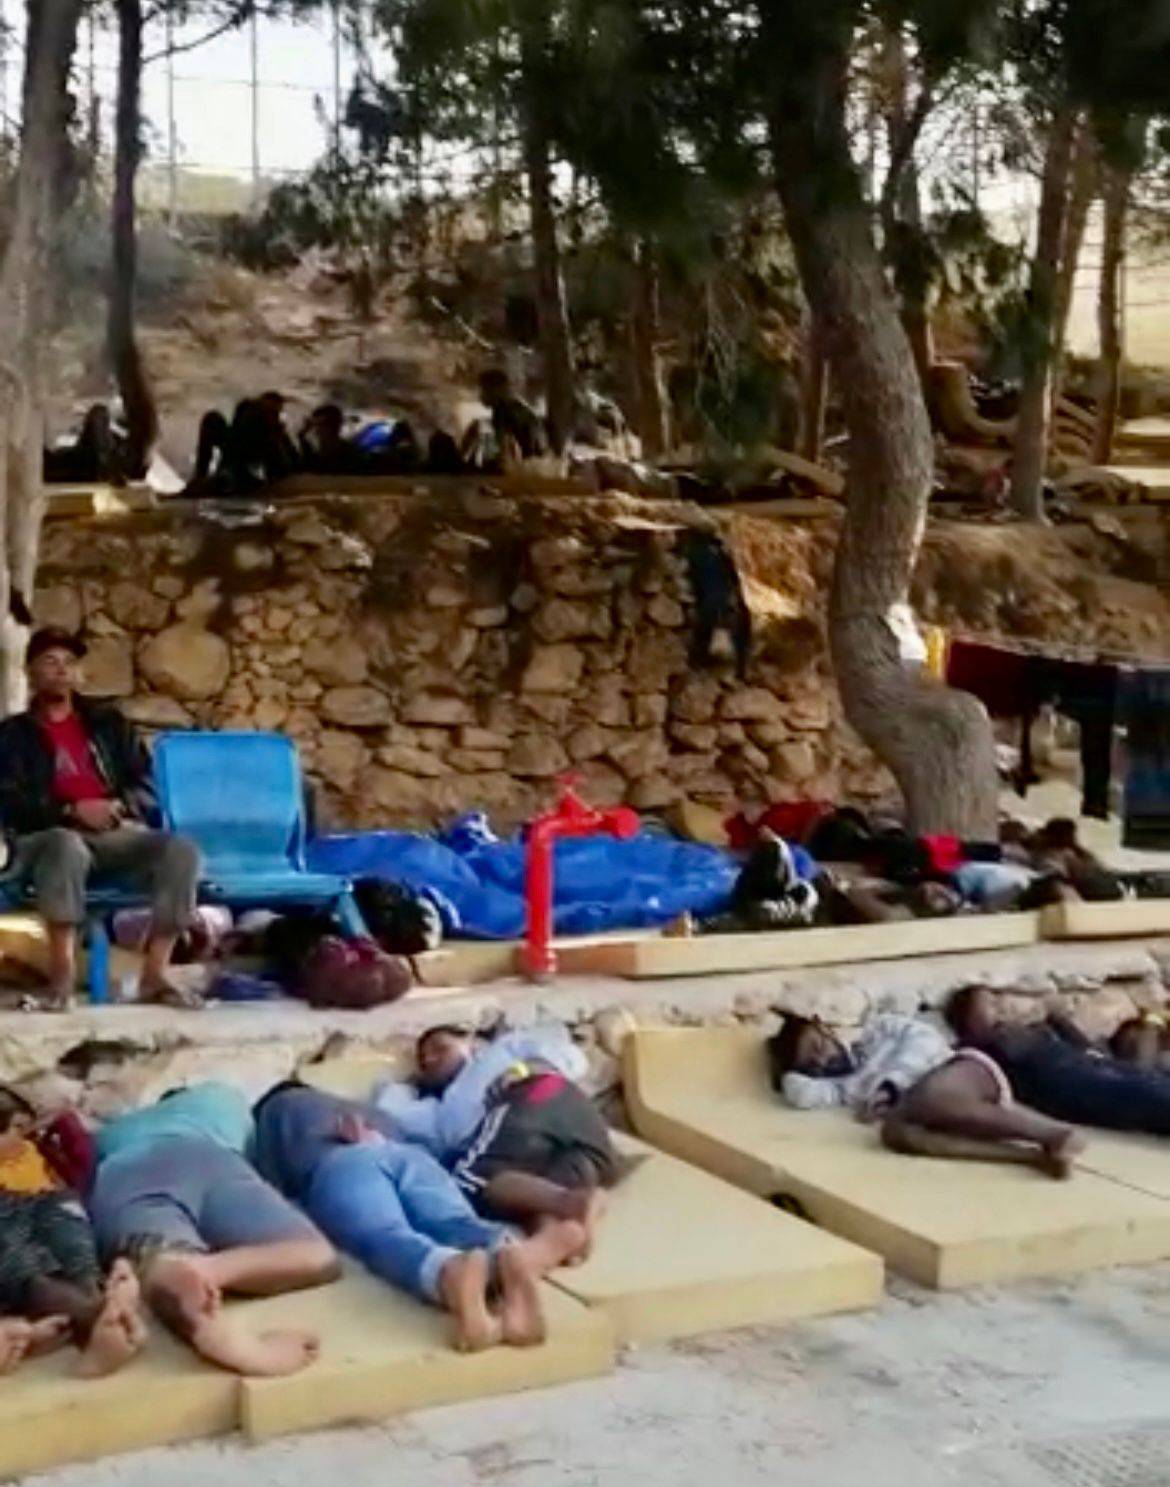 "Senza acqua e servizi igienici". L'hotspot di Lampedusa è una "polveriera"